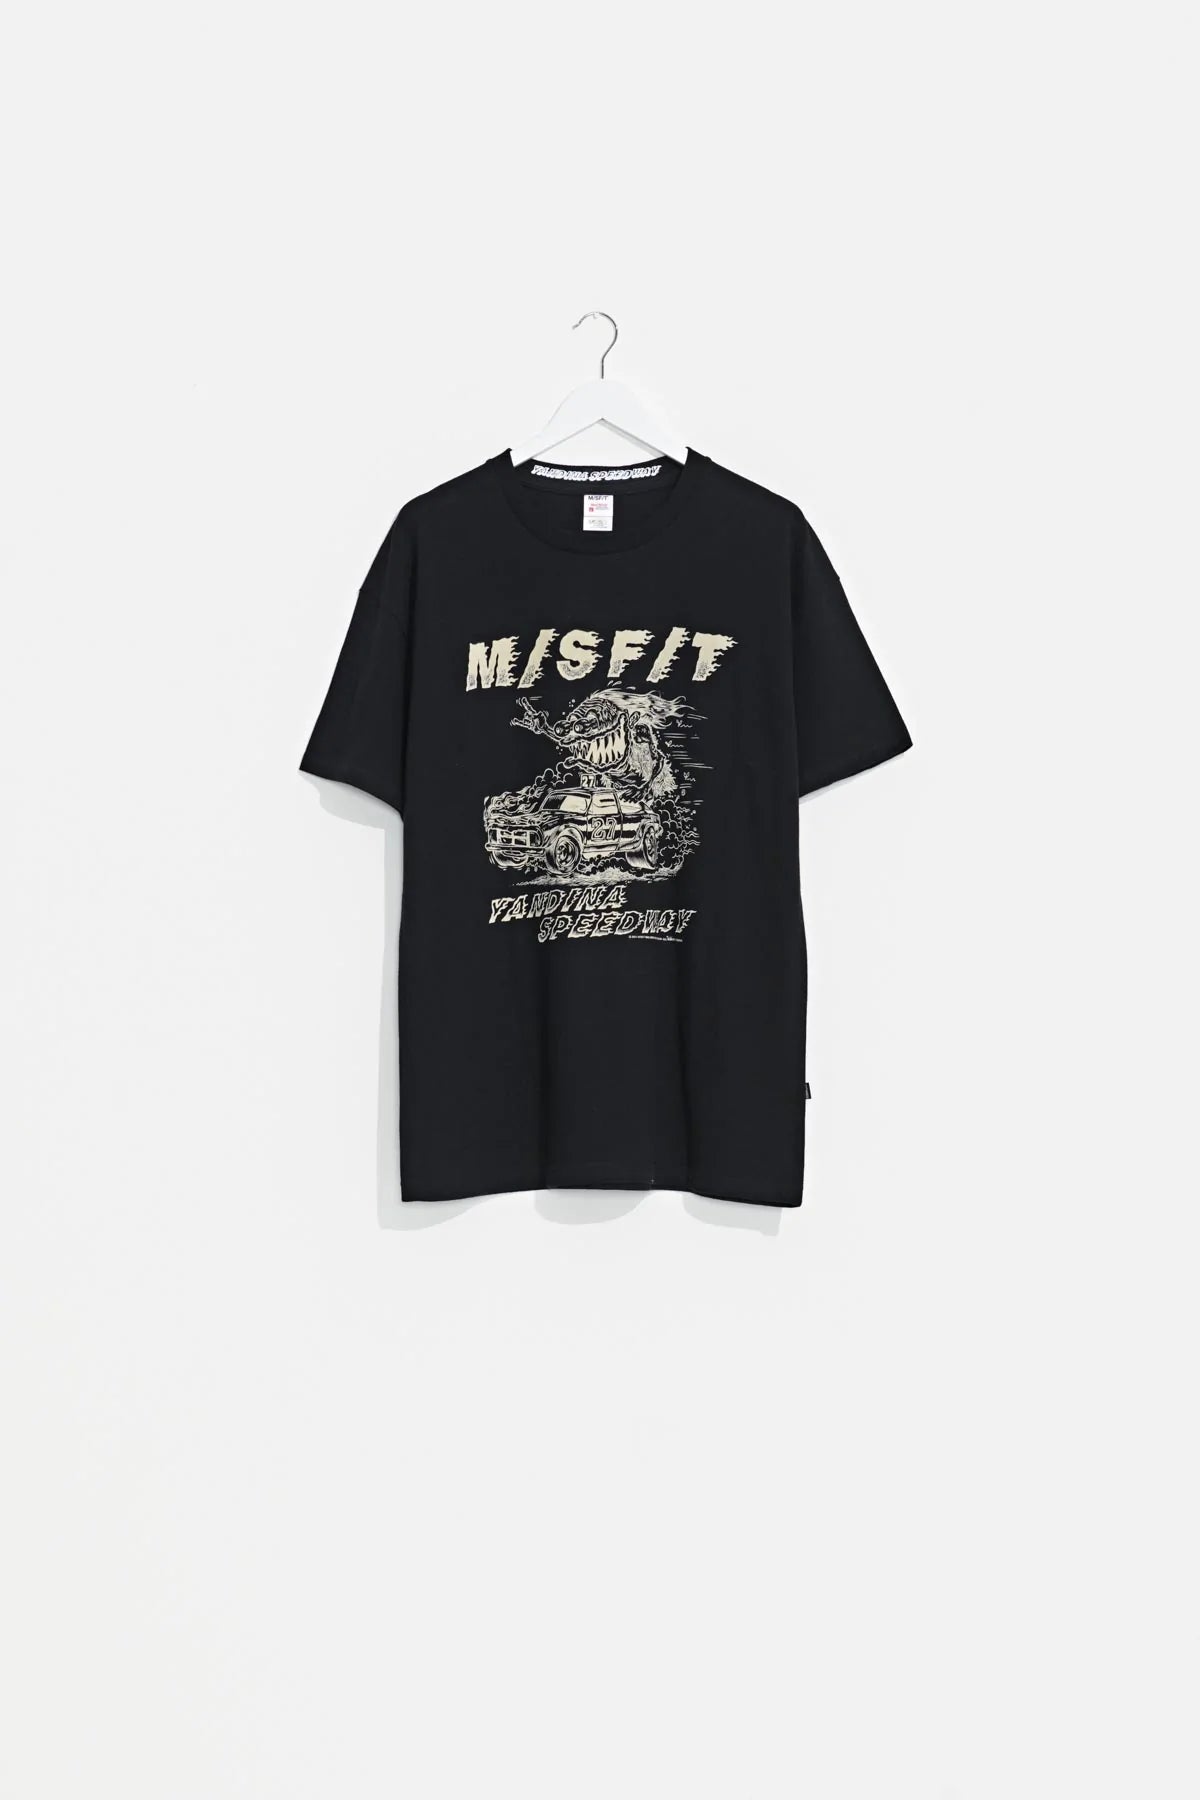 MISFIT Mens Yandina Speedway 50/50 SS T-Shirt